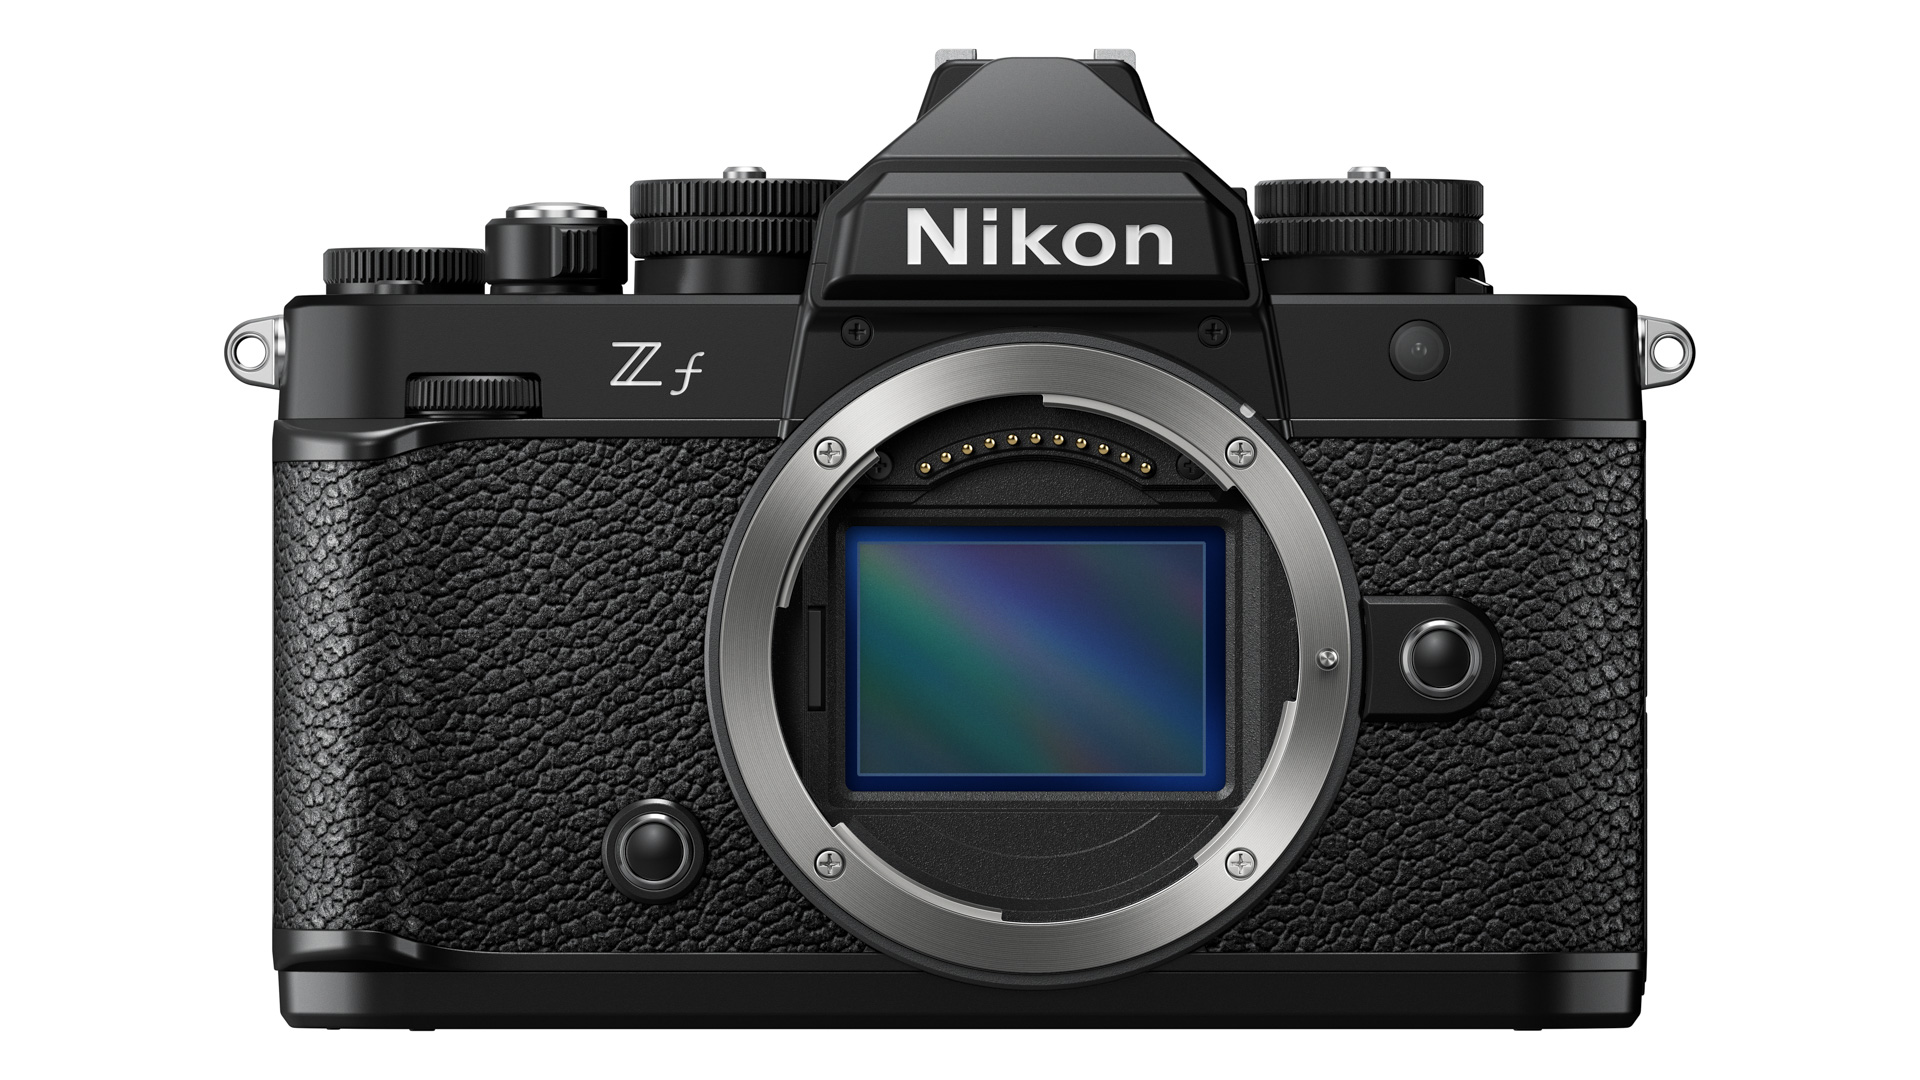 Nikon Zf front, no lens, on a white background